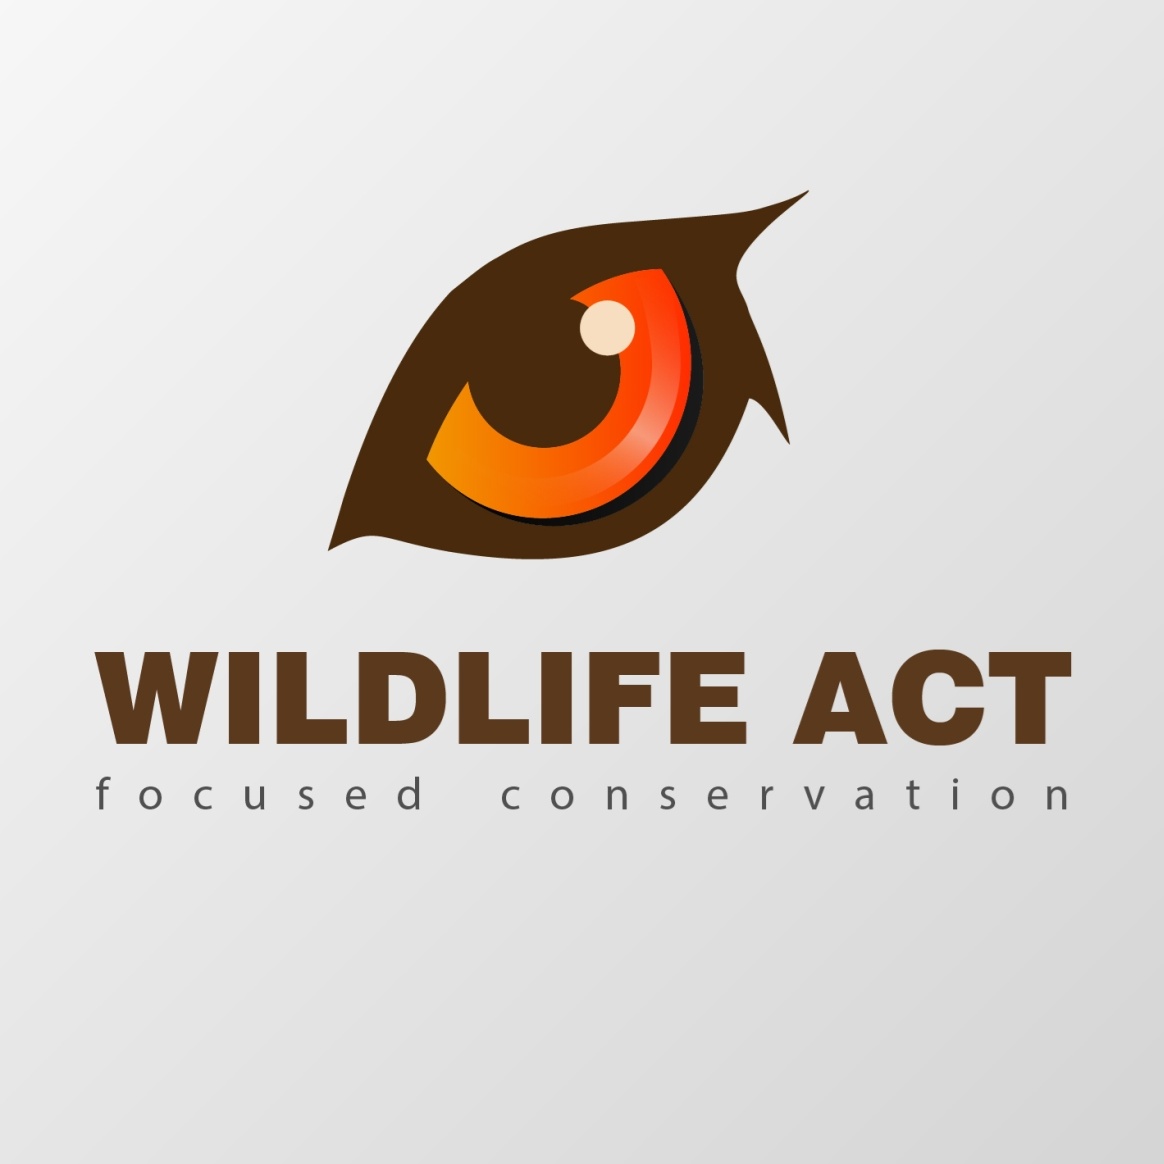 Save wildlife Logo by Mandy Web Design on Dribbble